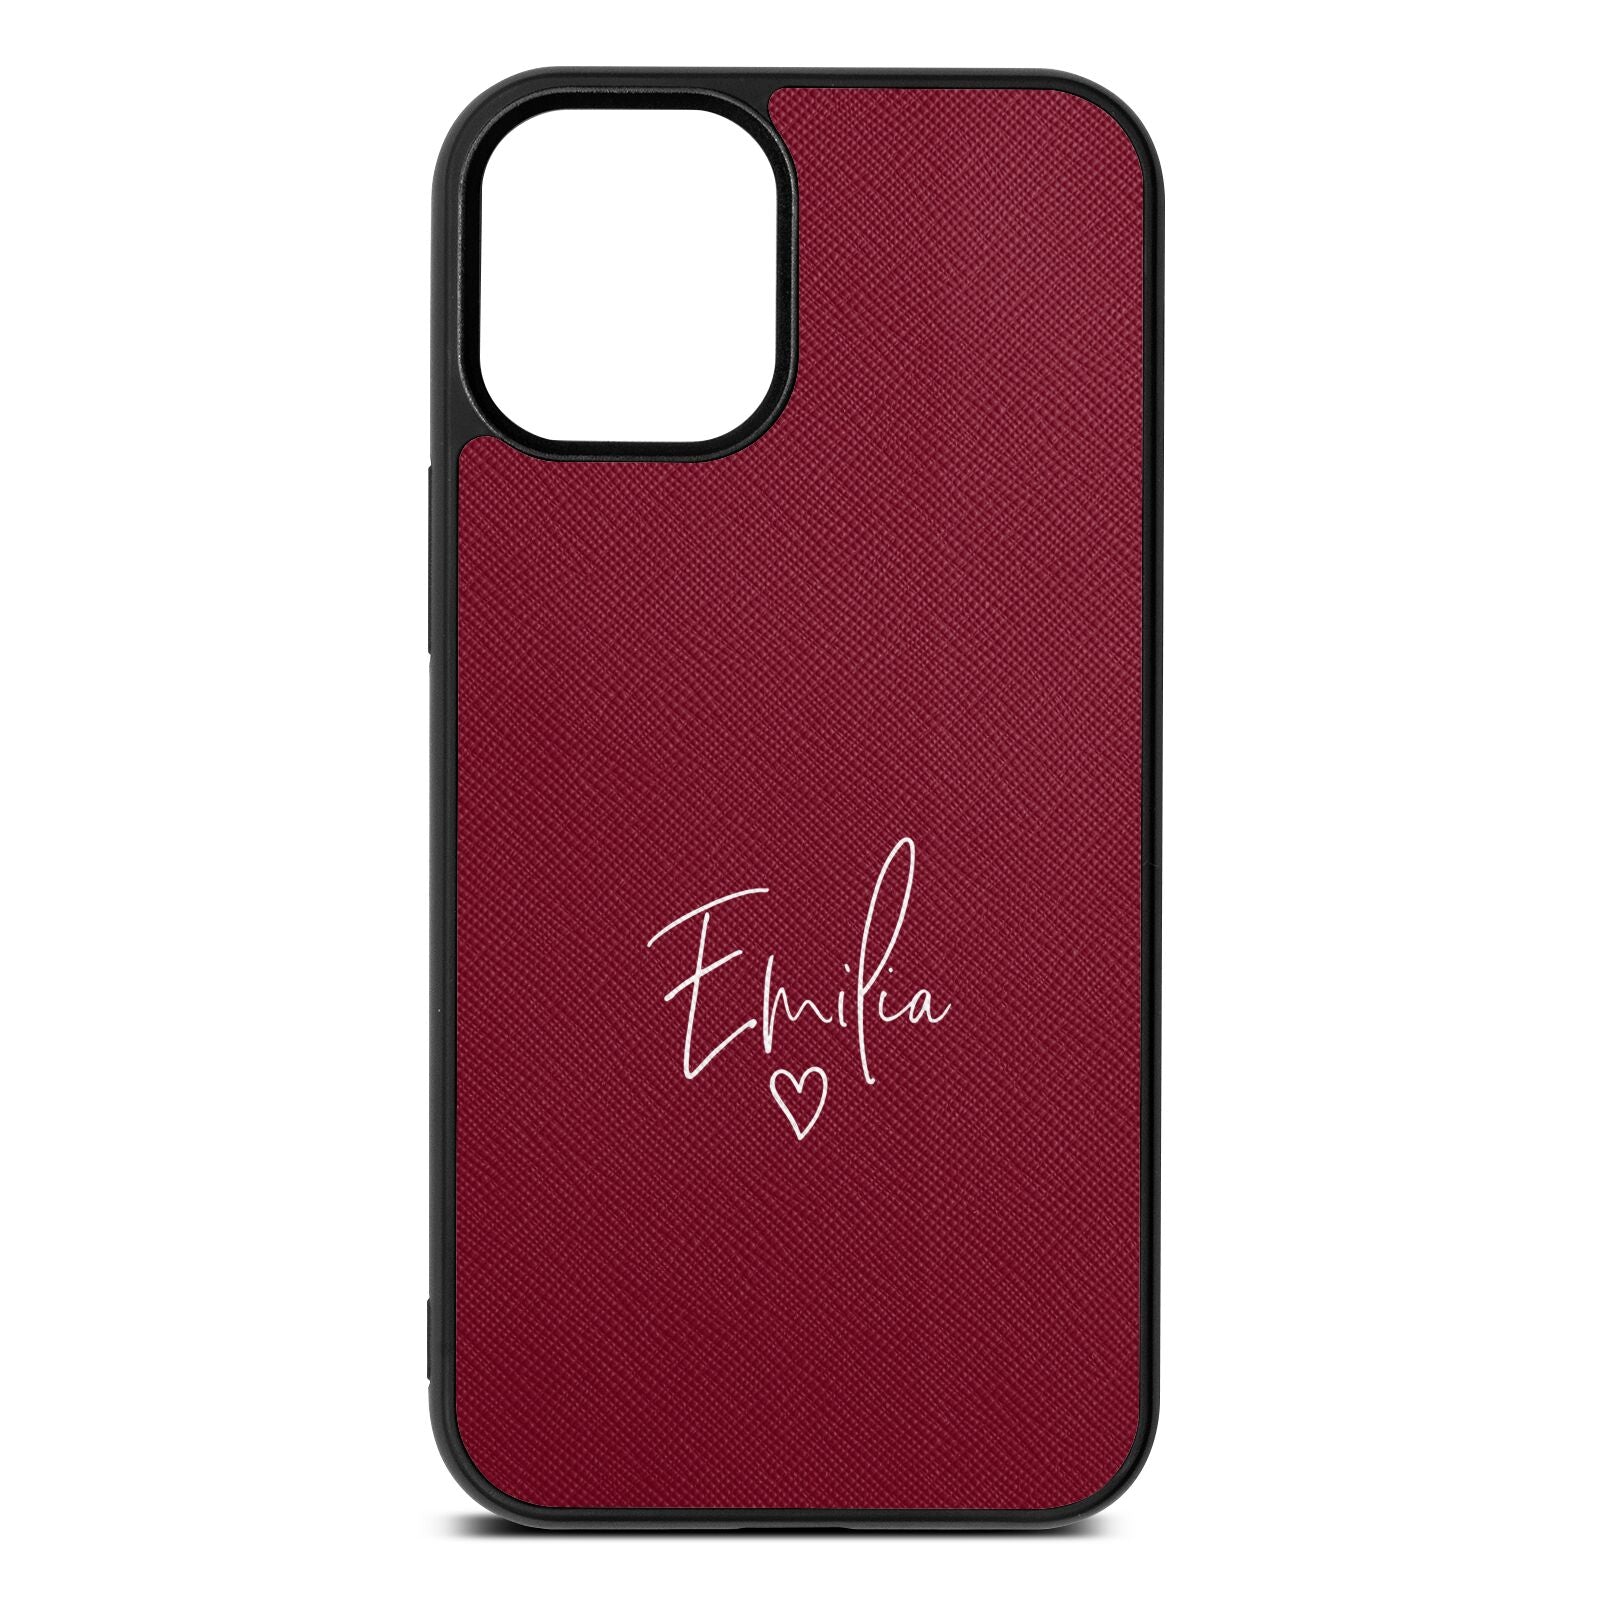 White Handwritten Name Transparent Wine Red Saffiano Leather iPhone 12 Mini Case